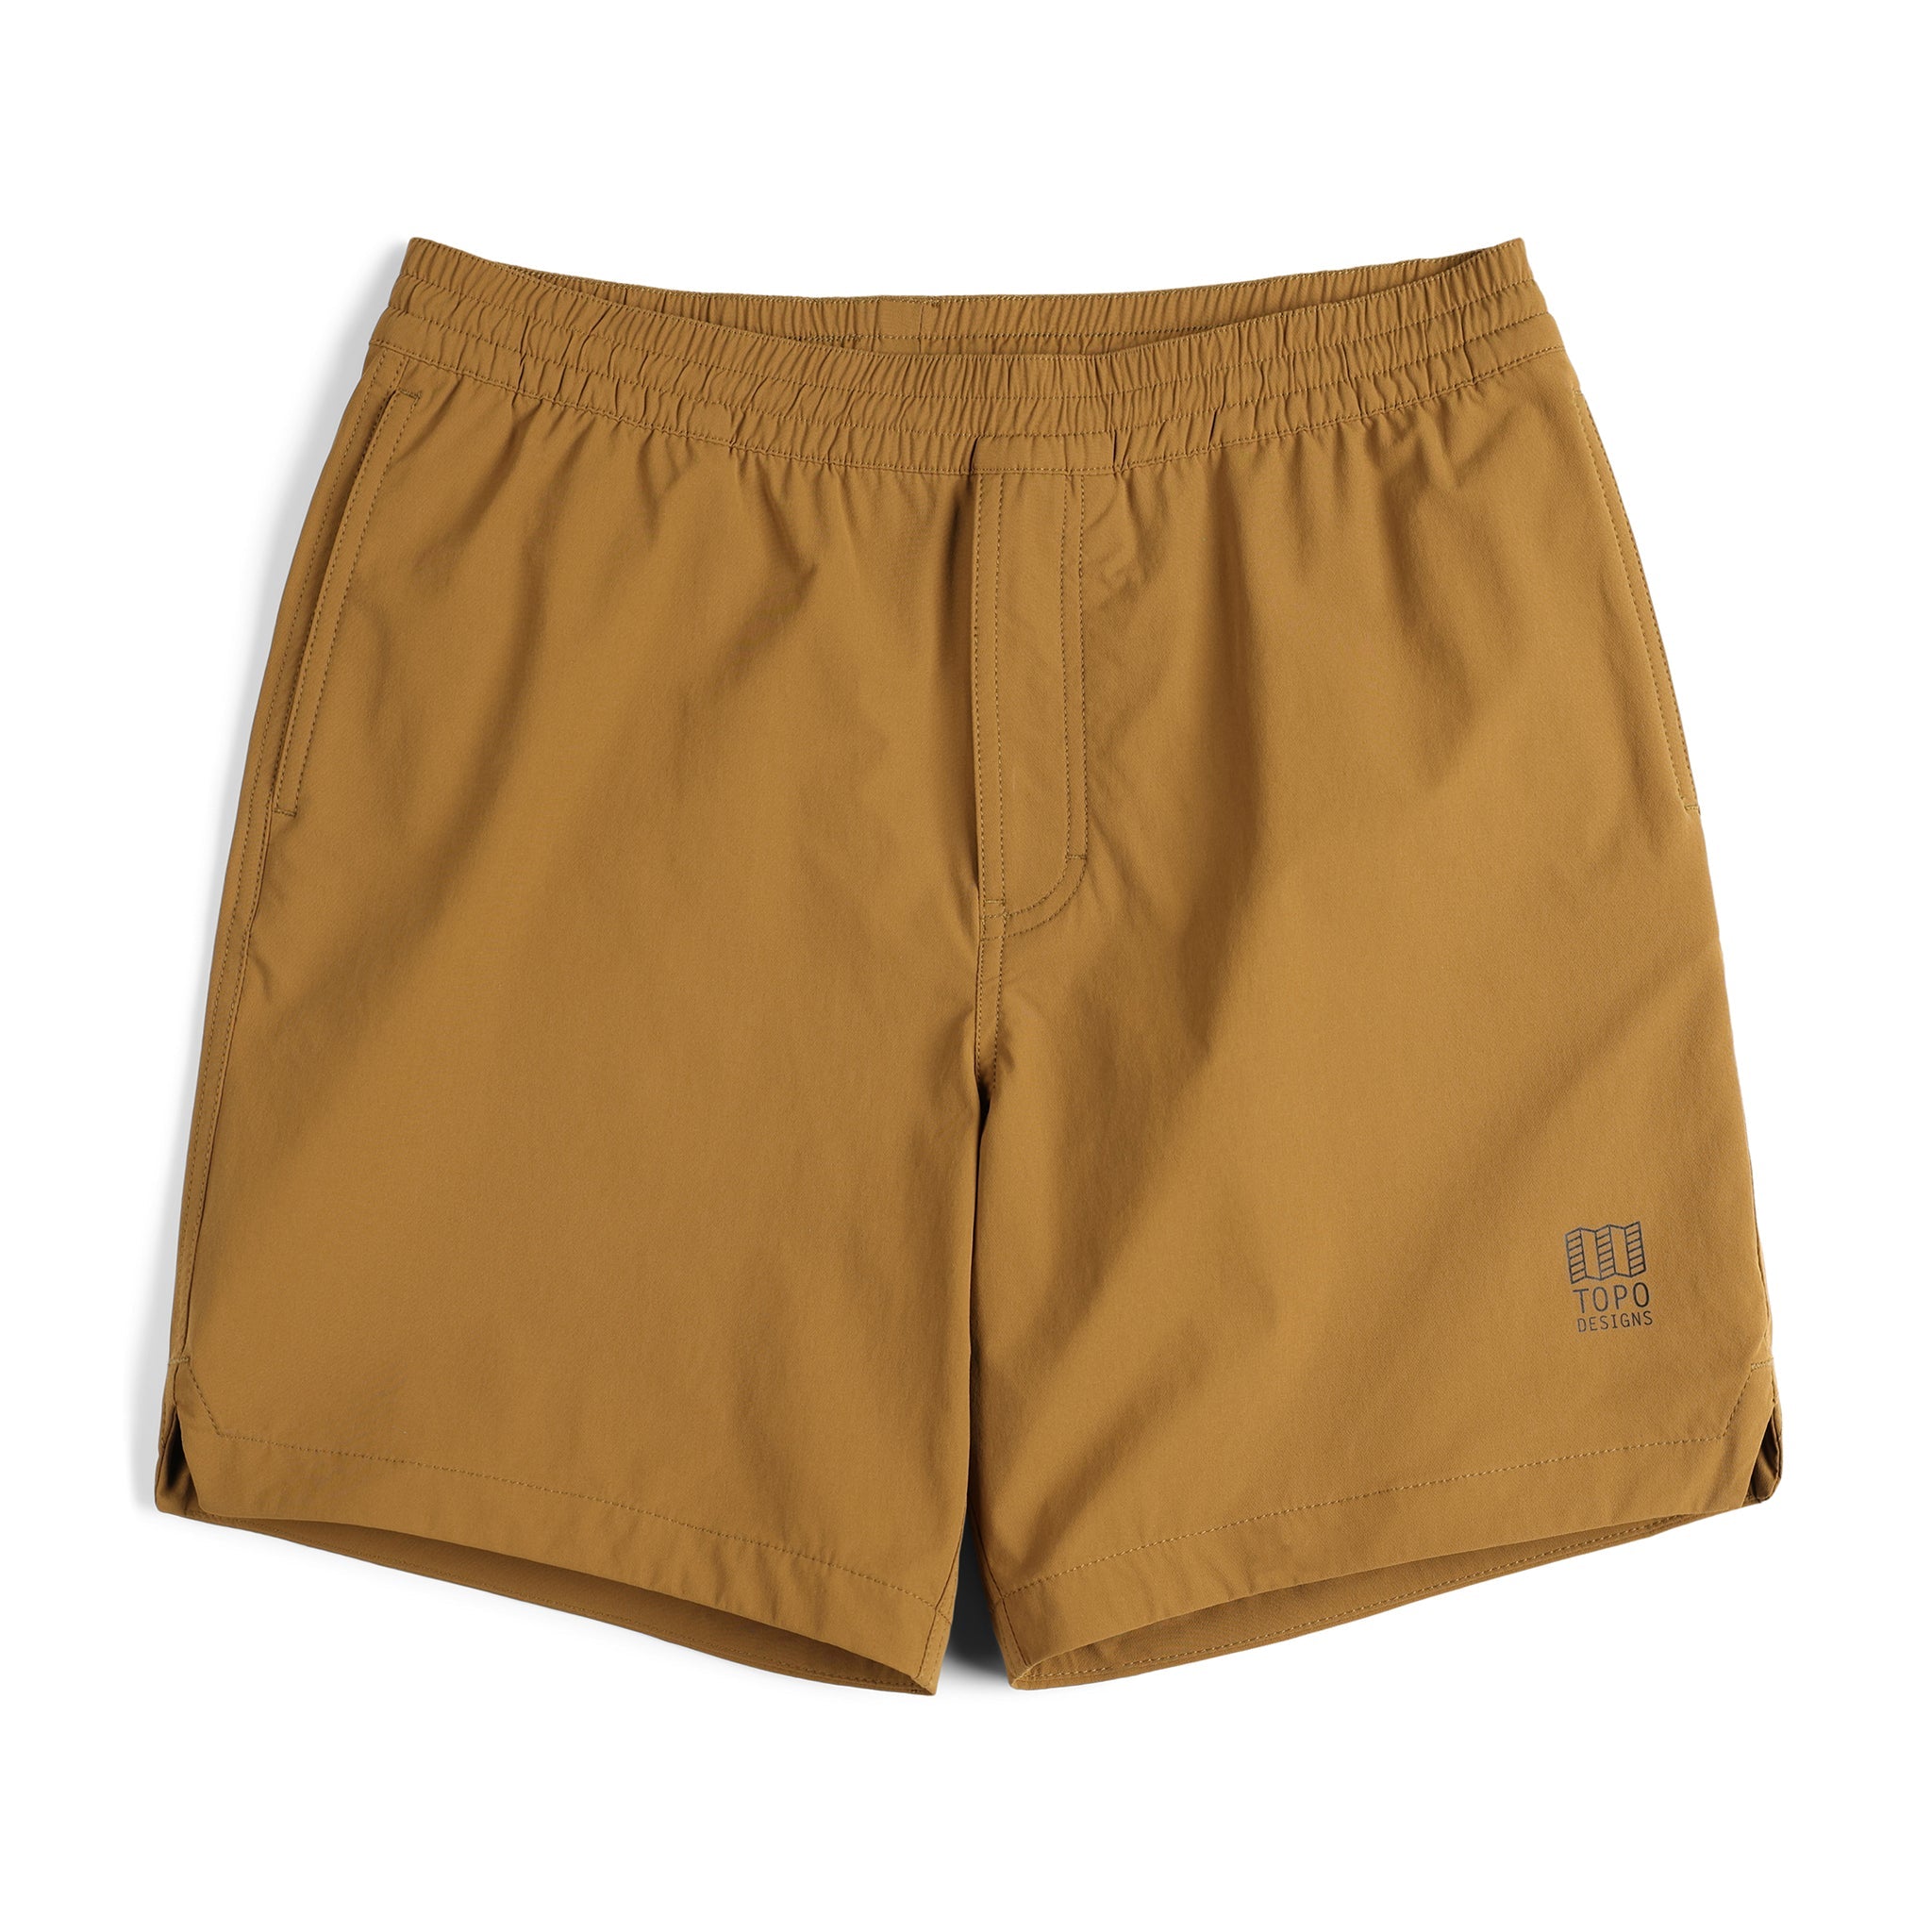 Topo Designs Men's Global lightweight quick dry travel Shorts in "Dark Khaki" brown.